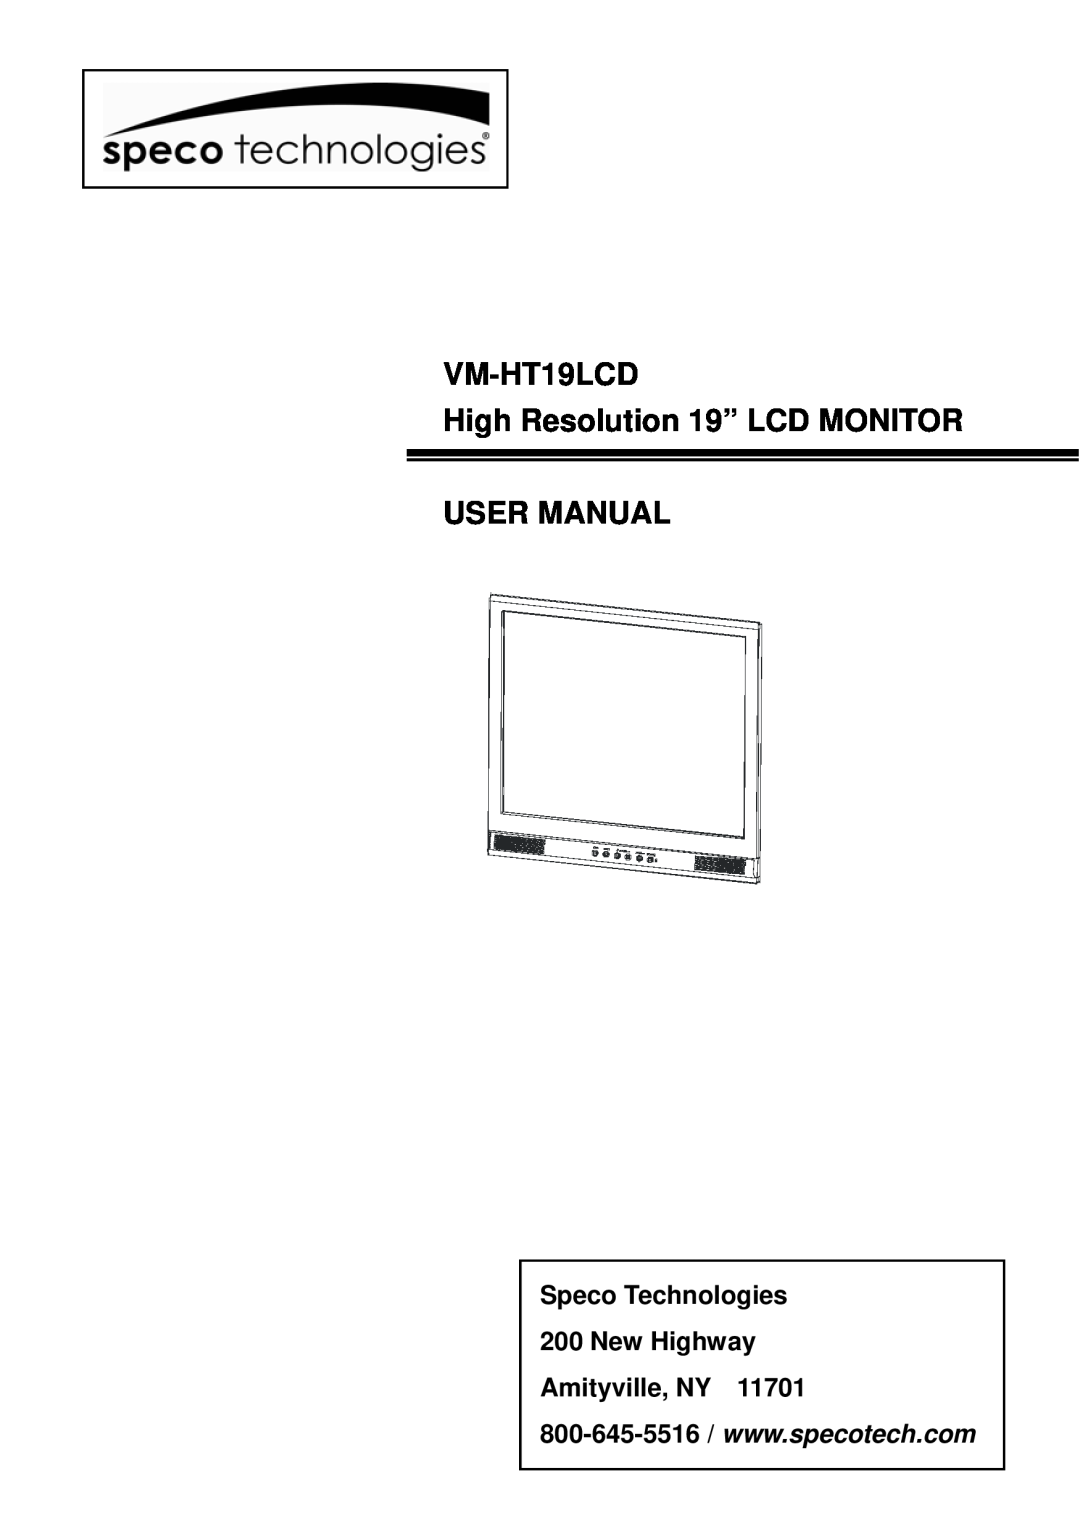 Speco Technologies user manual VM-HT19LCD High Resolution 19” LCD MONITOR USER MANUAL 